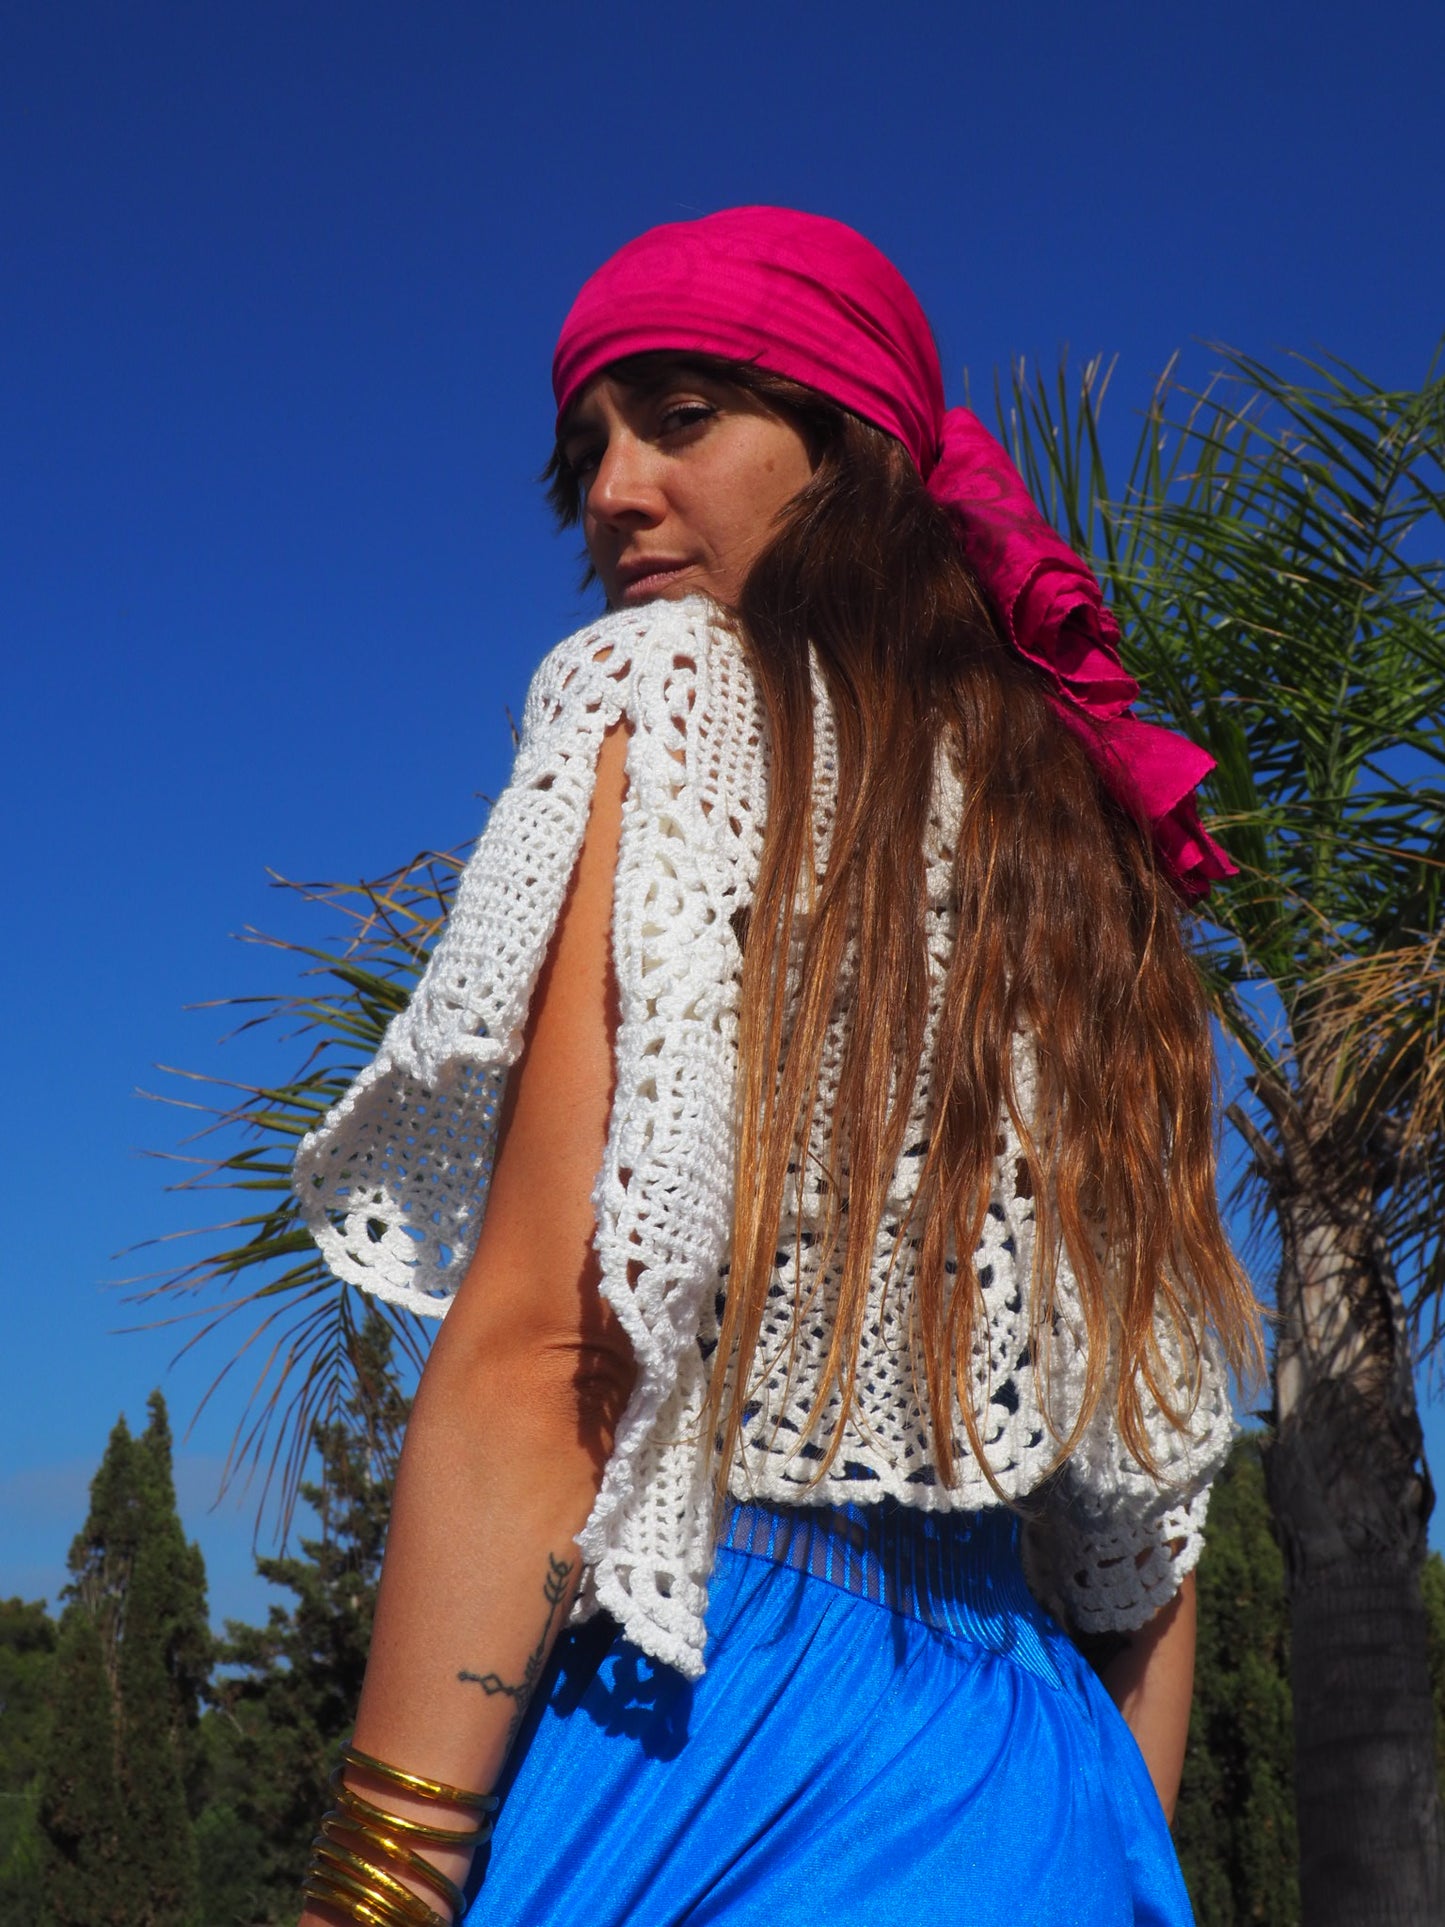 Antique handmade lace crochet up-cycled top by Vagabond Ibiza | vagabond ibiza